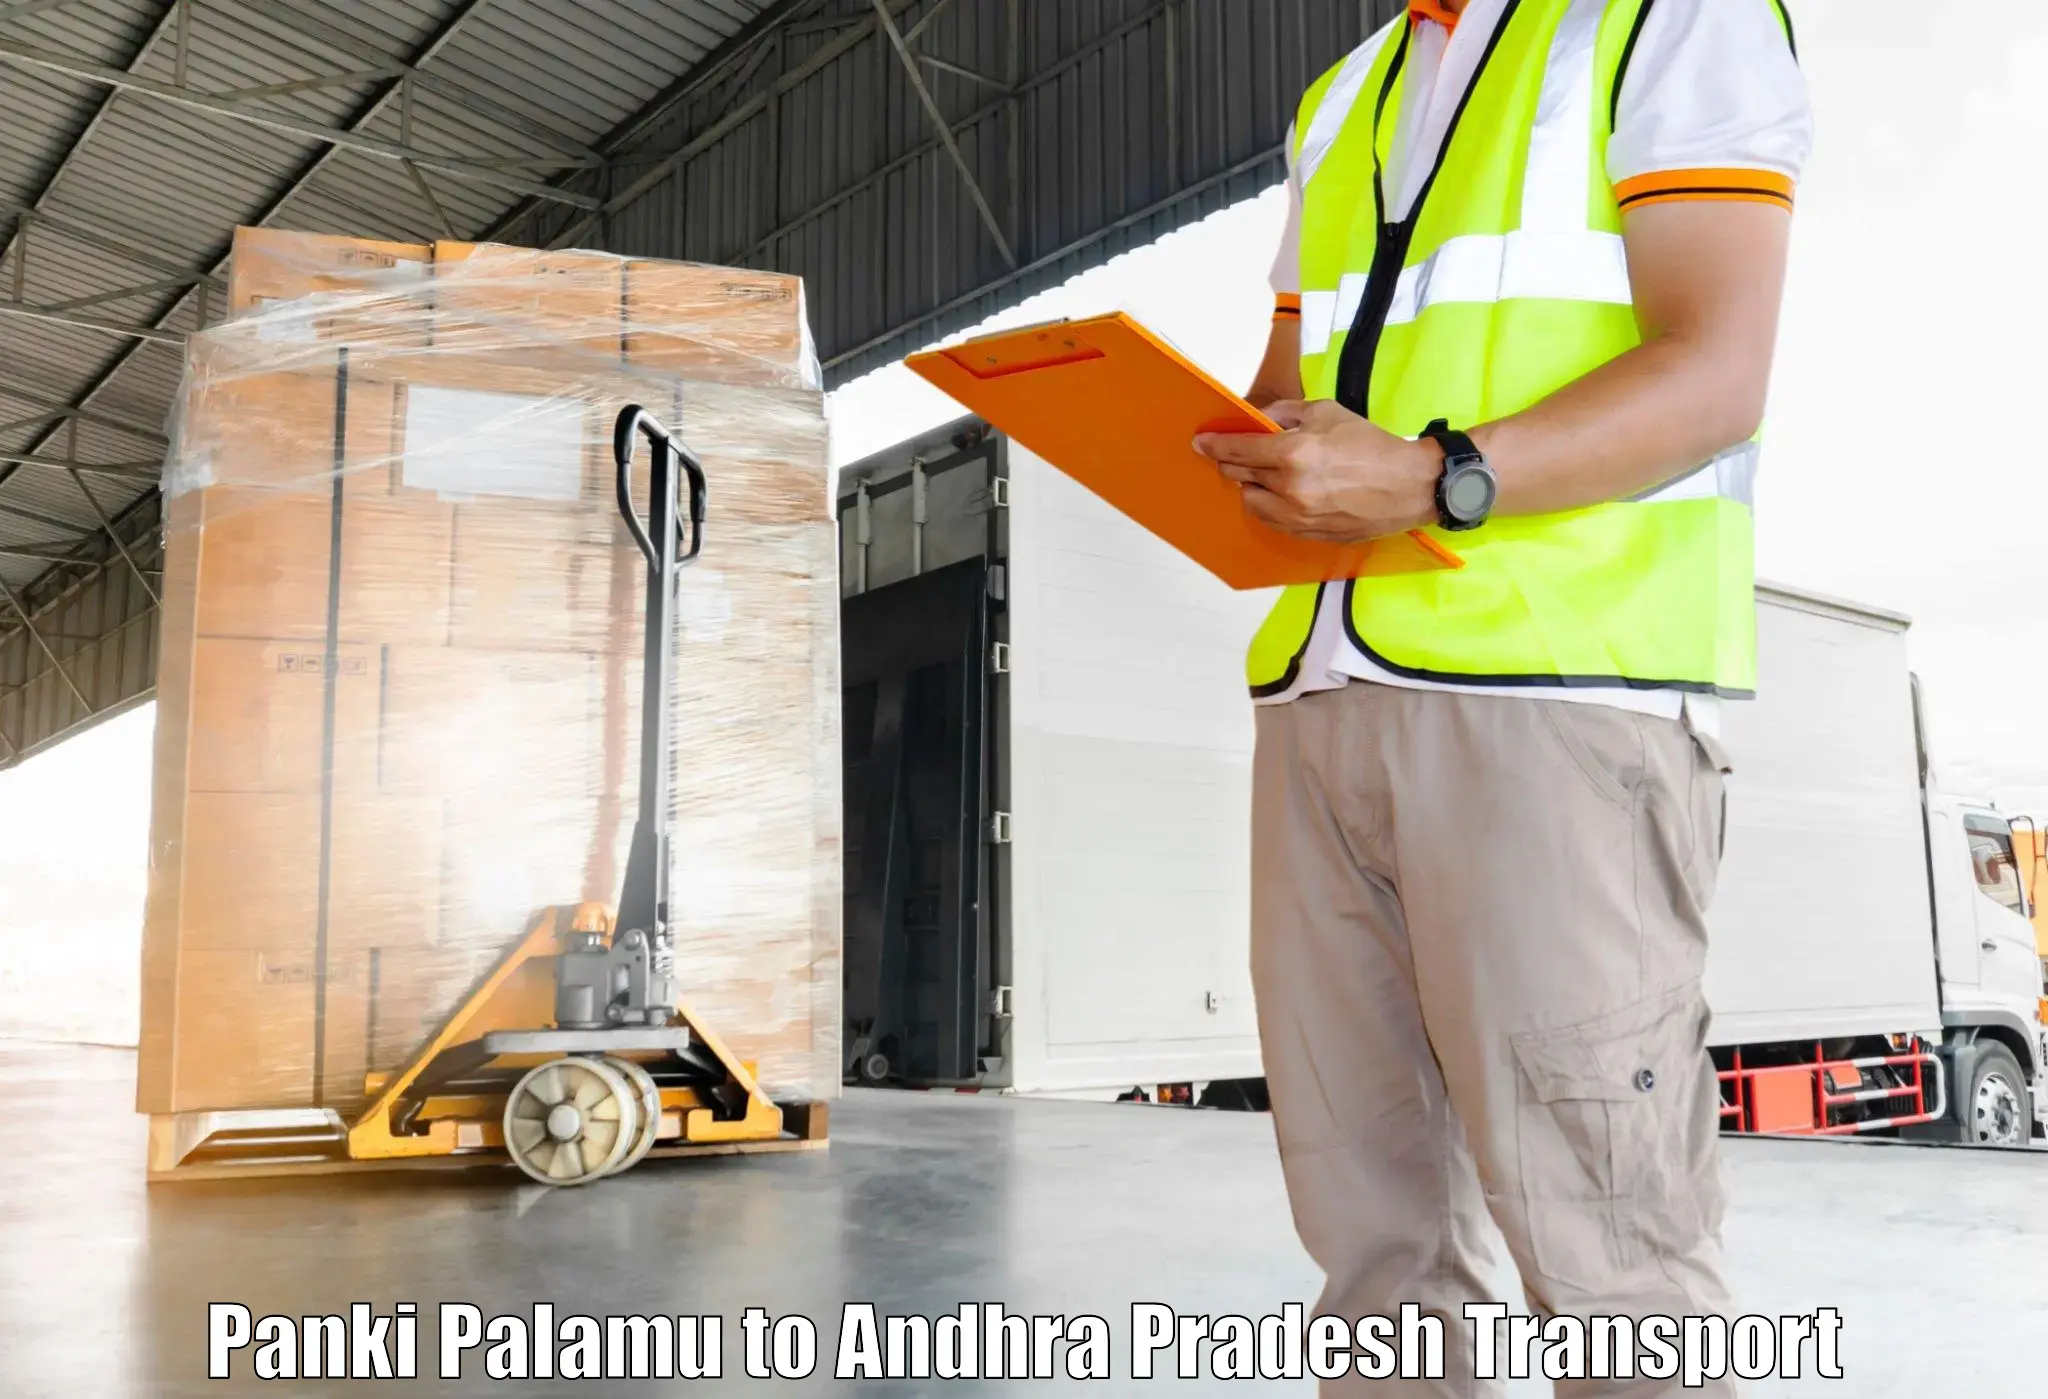 Shipping partner Panki Palamu to Mantada